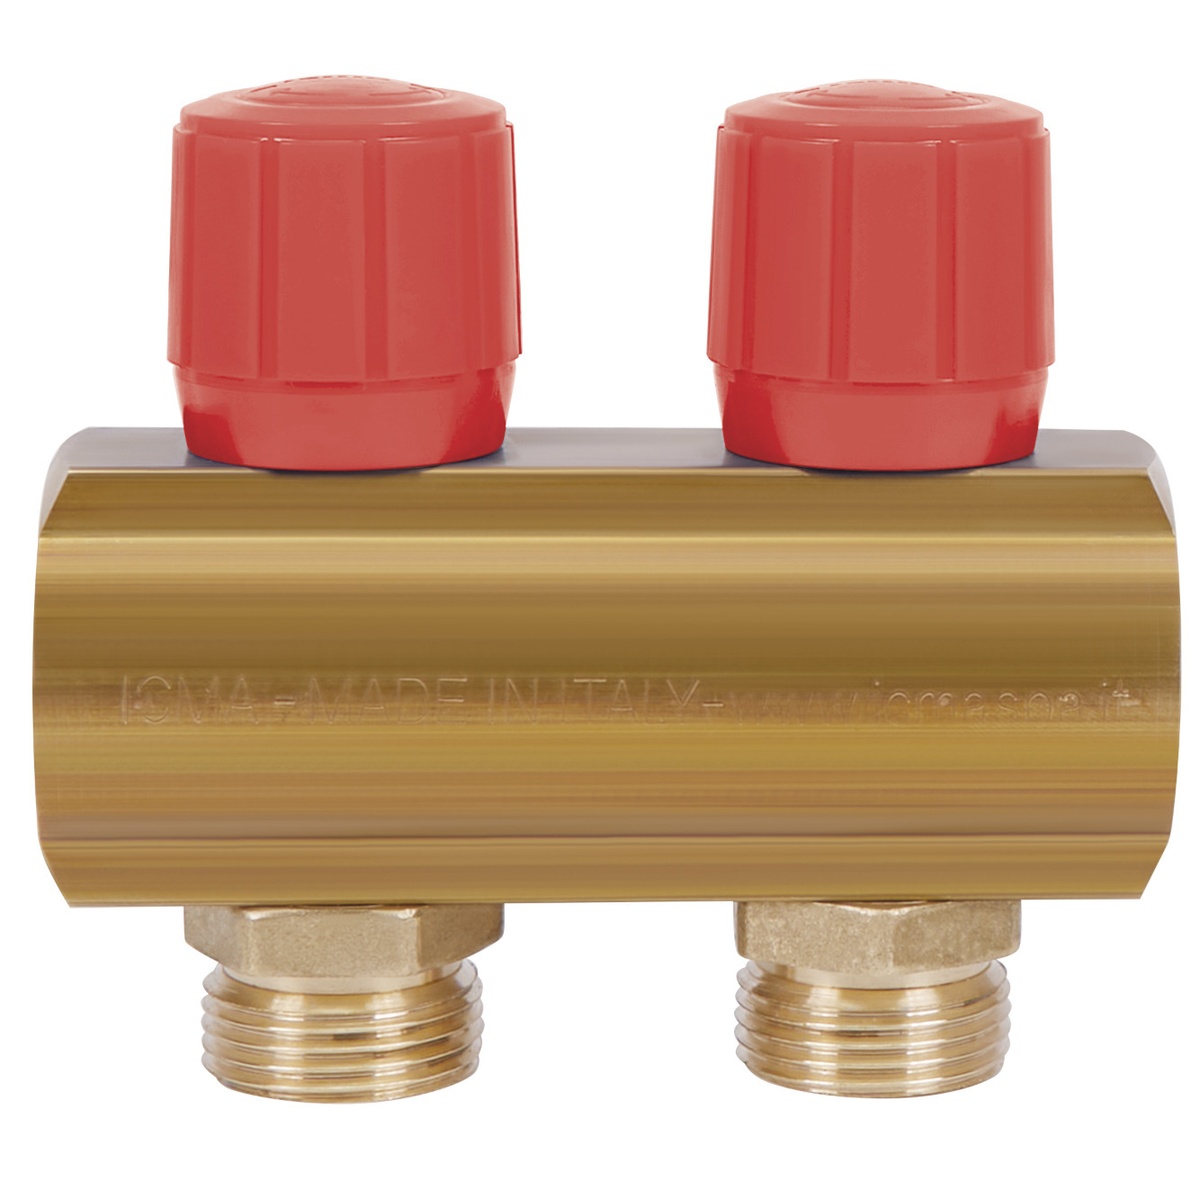 Коллектор для водопровода ICMA 2 контура 1"/3/4" 1105 (Red) 871105PG0511